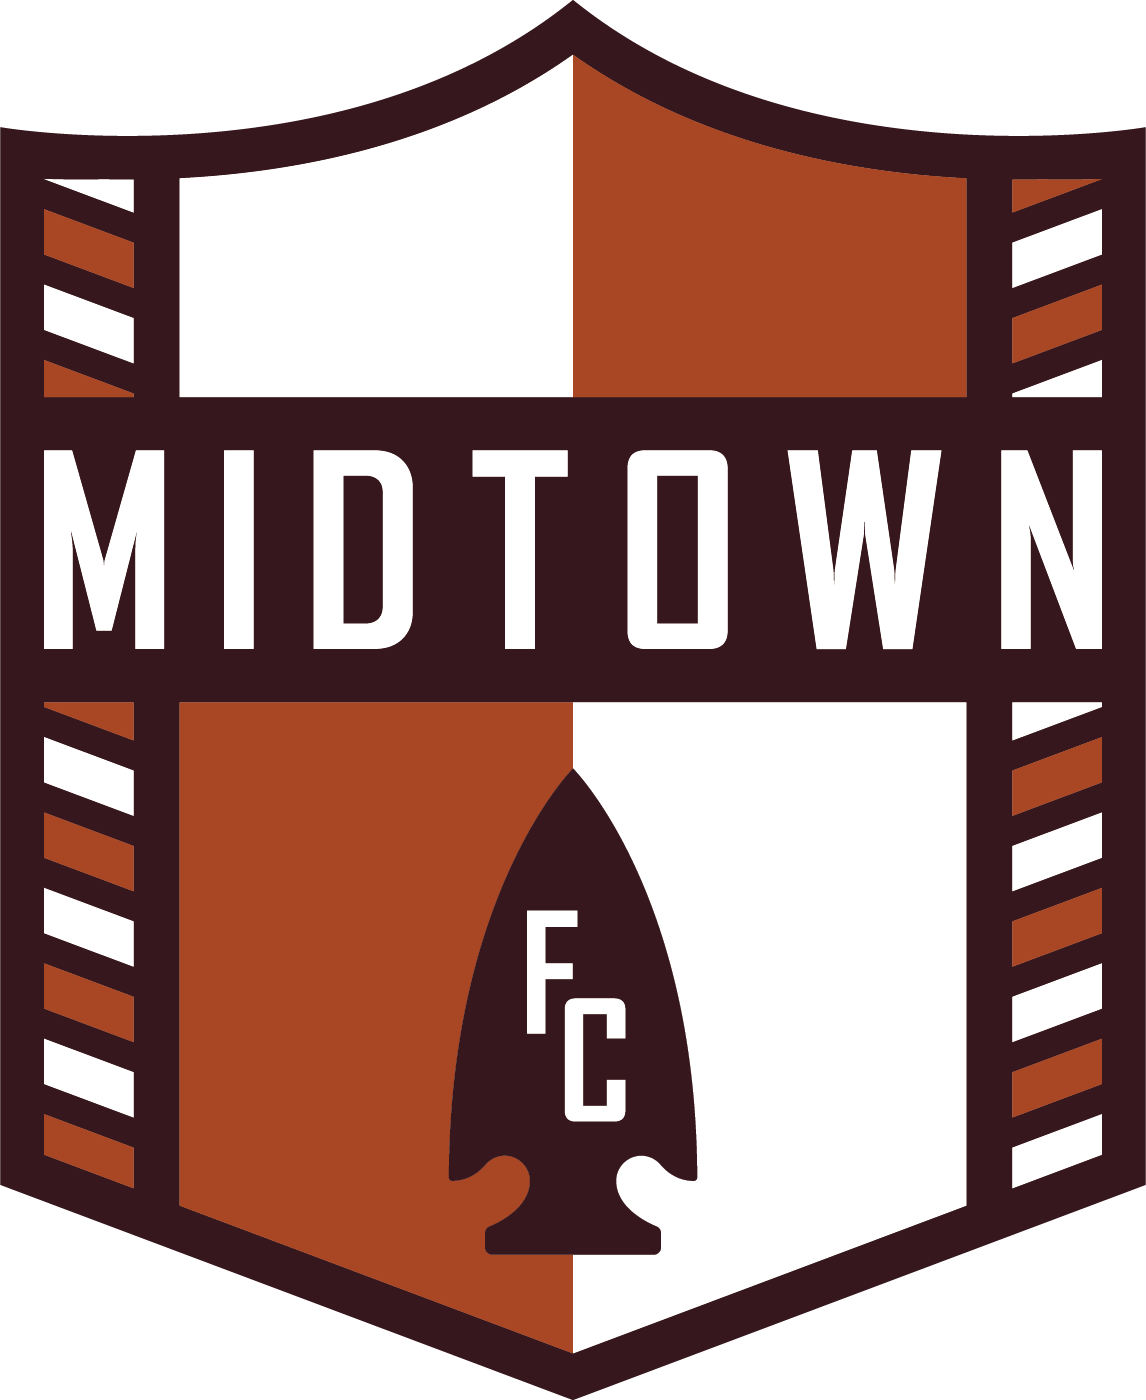 Midtown FC Team Sponsorships